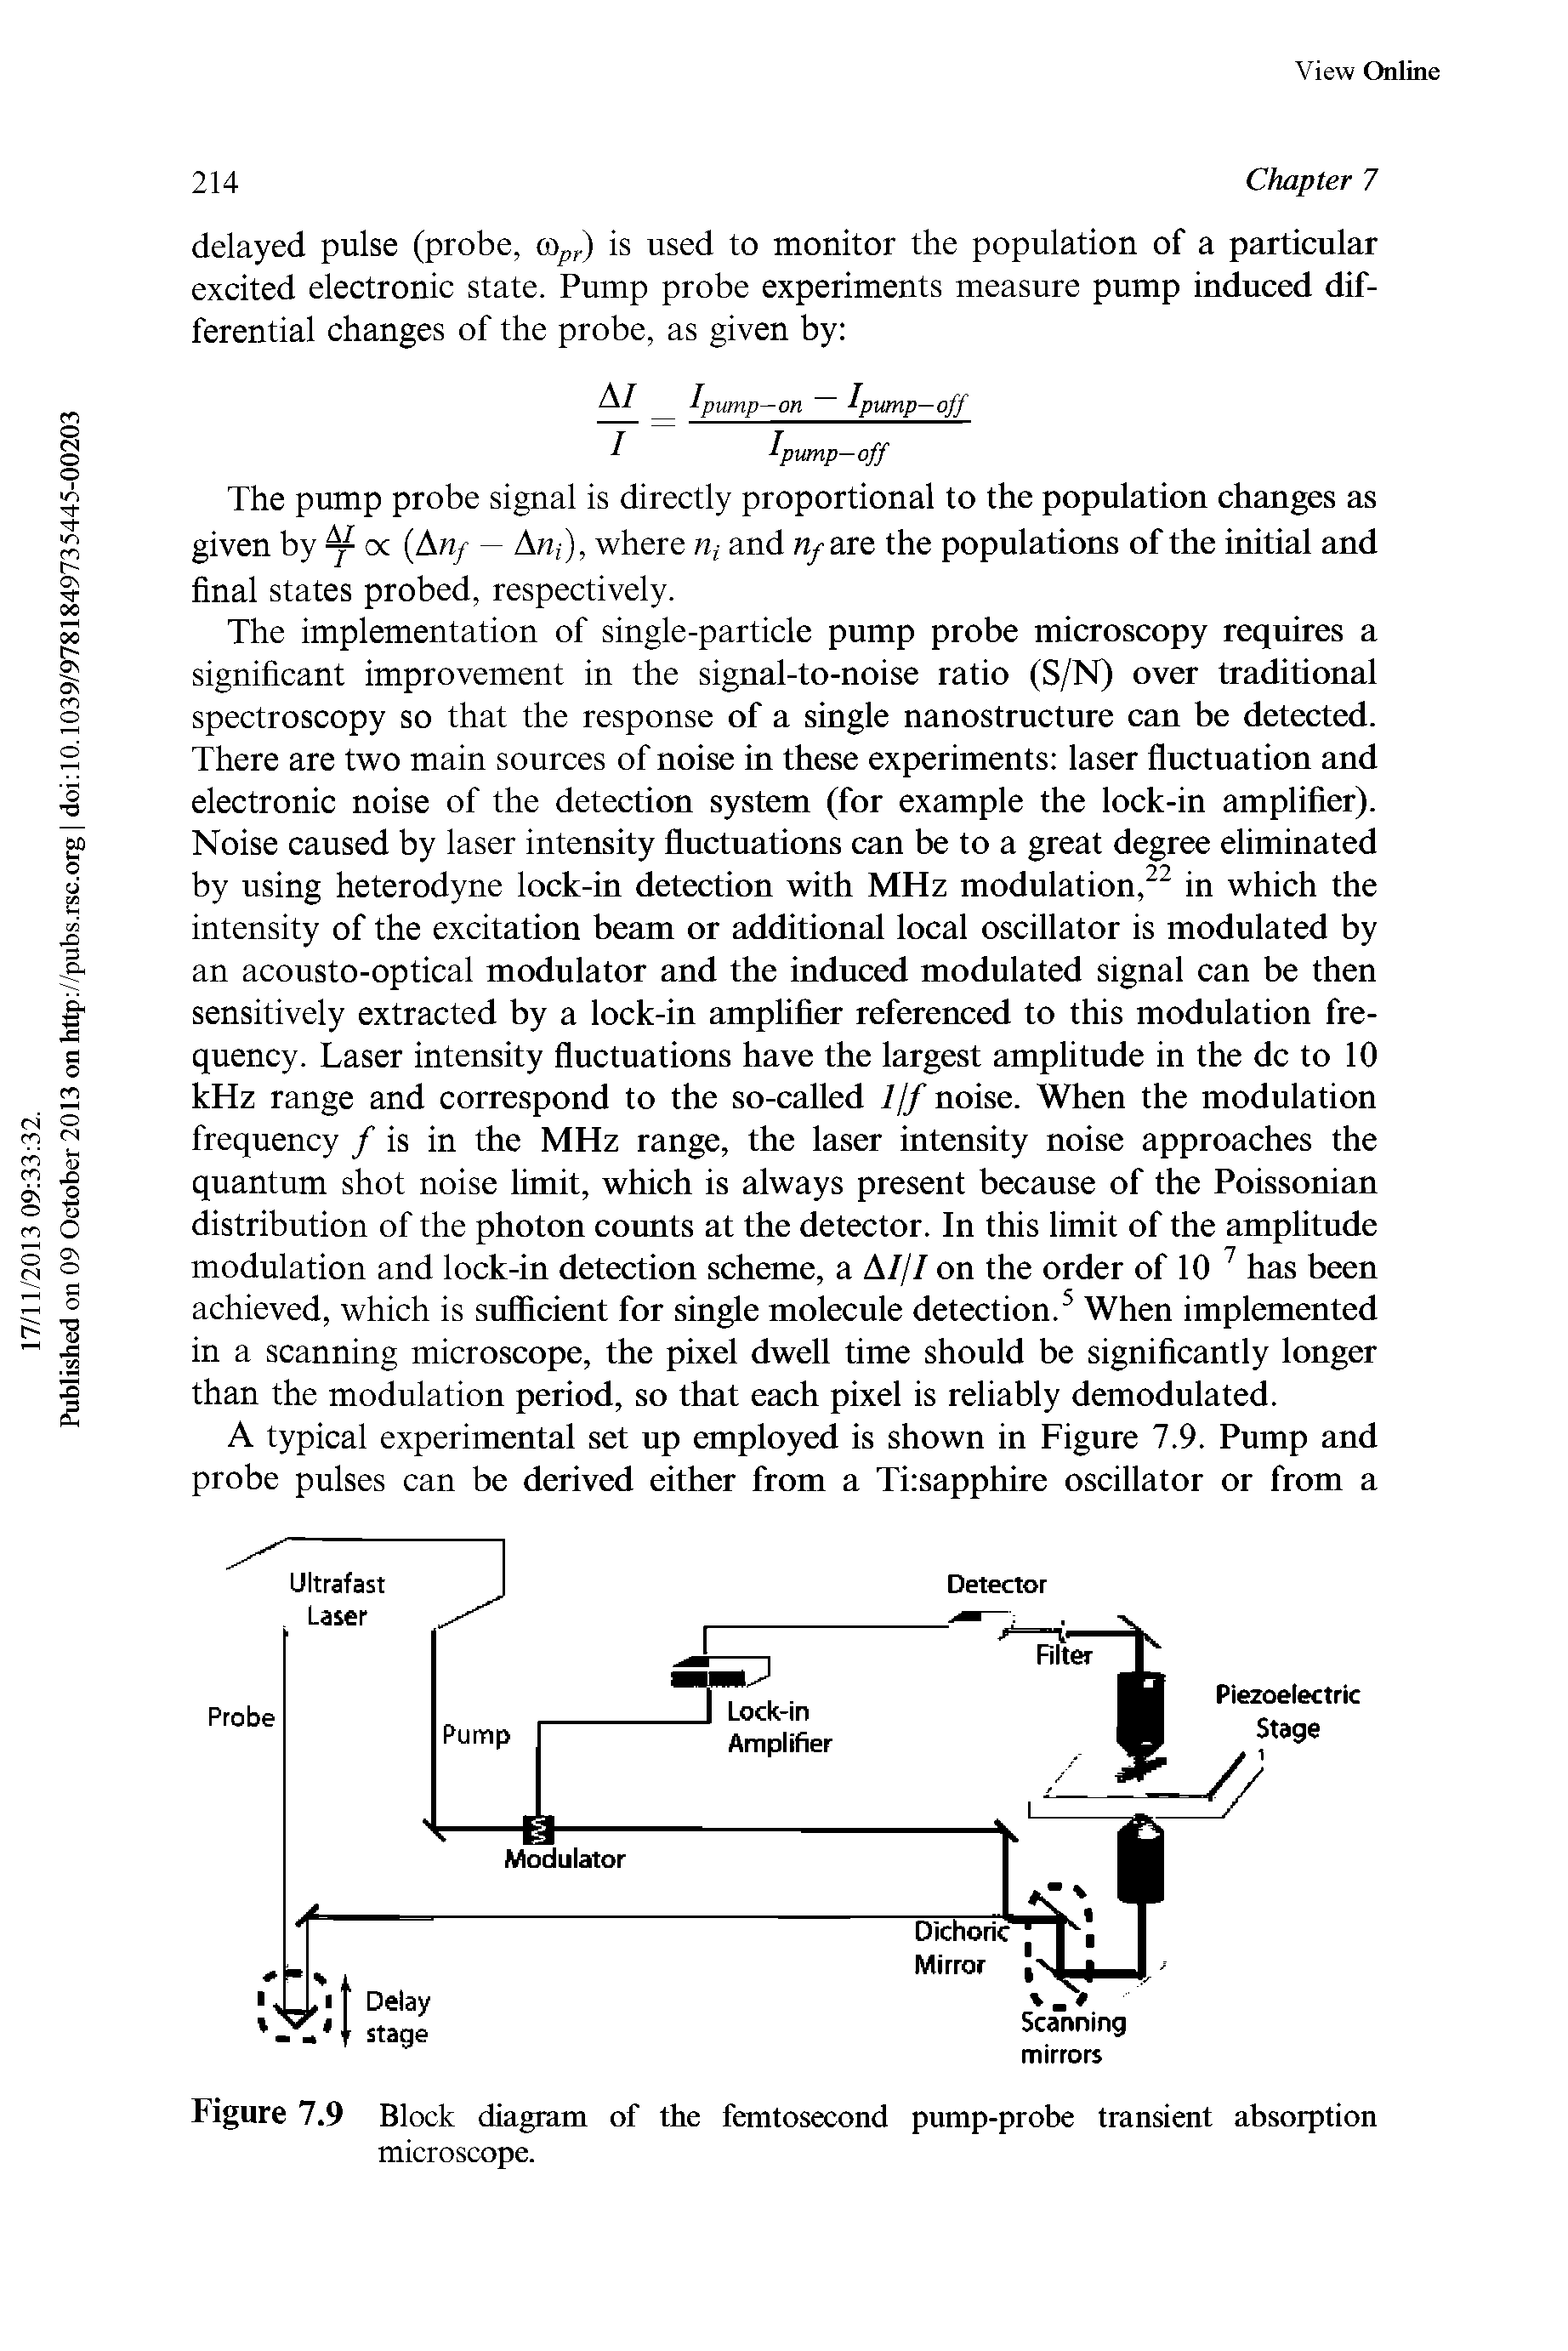 Figure 7.9 Block diagram of the femtosecond pump-probe transient absorption microscope.